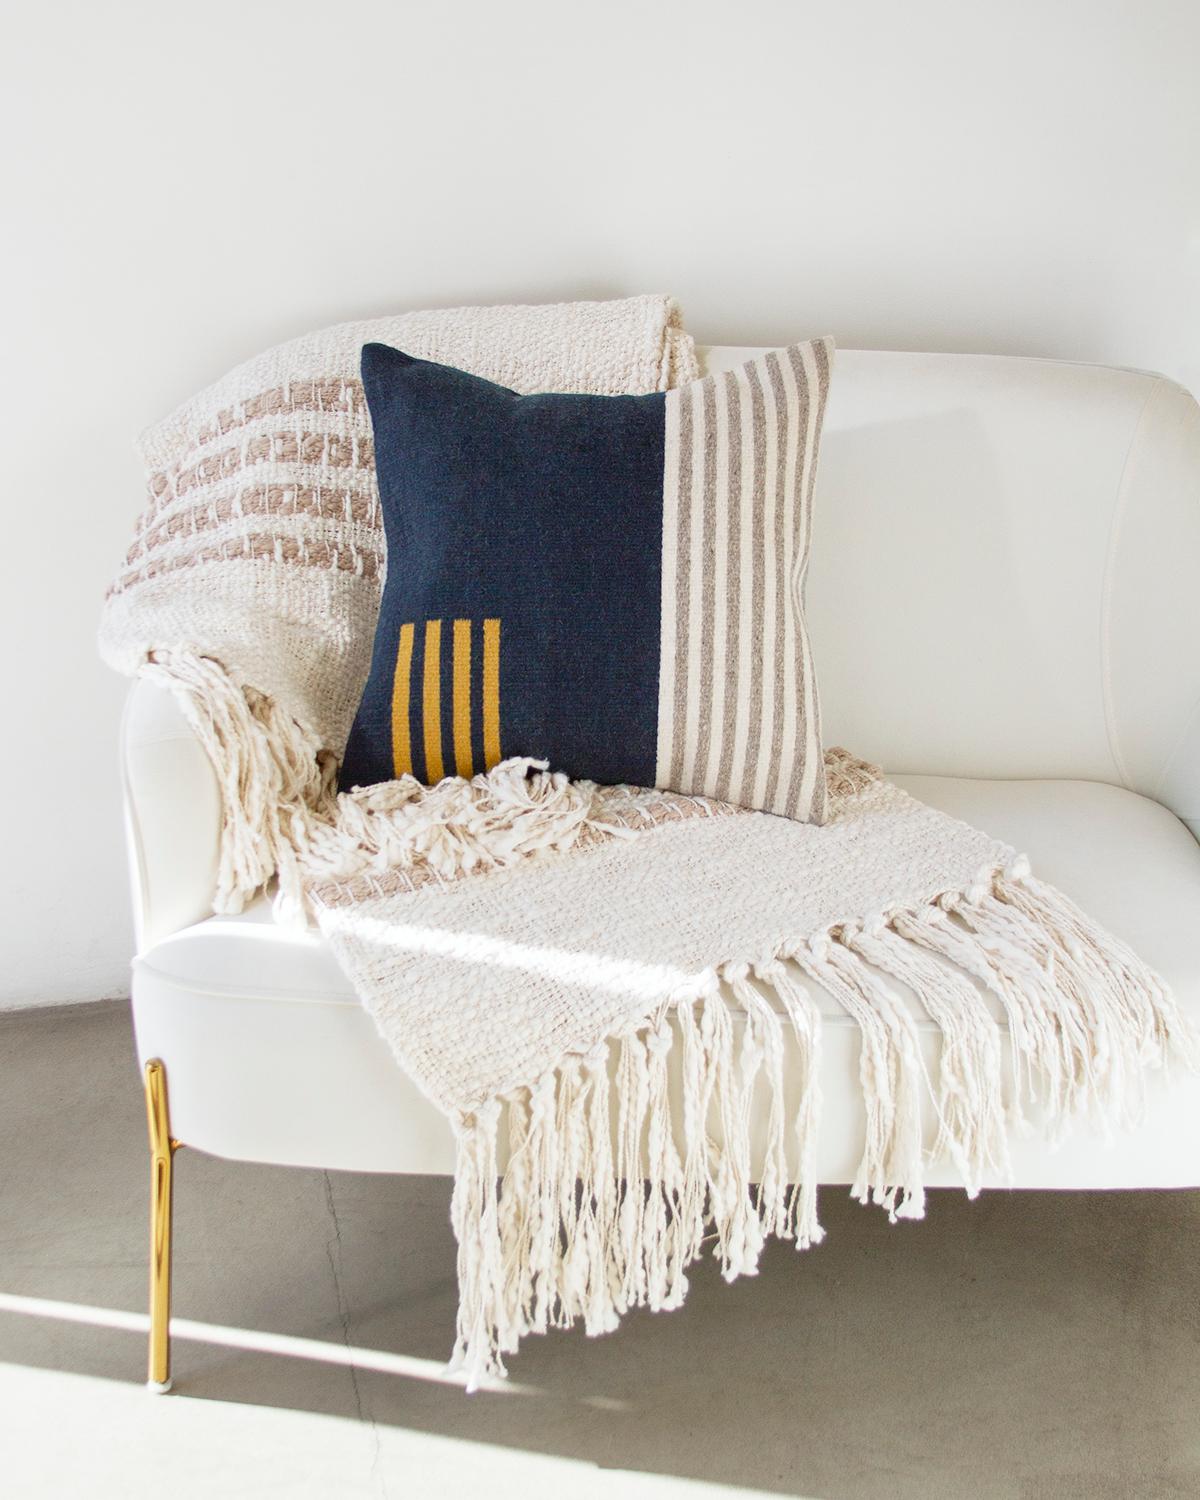 Argentine Miel White and Beige Textured Cotton Throw Blanket - Handmade For Sale